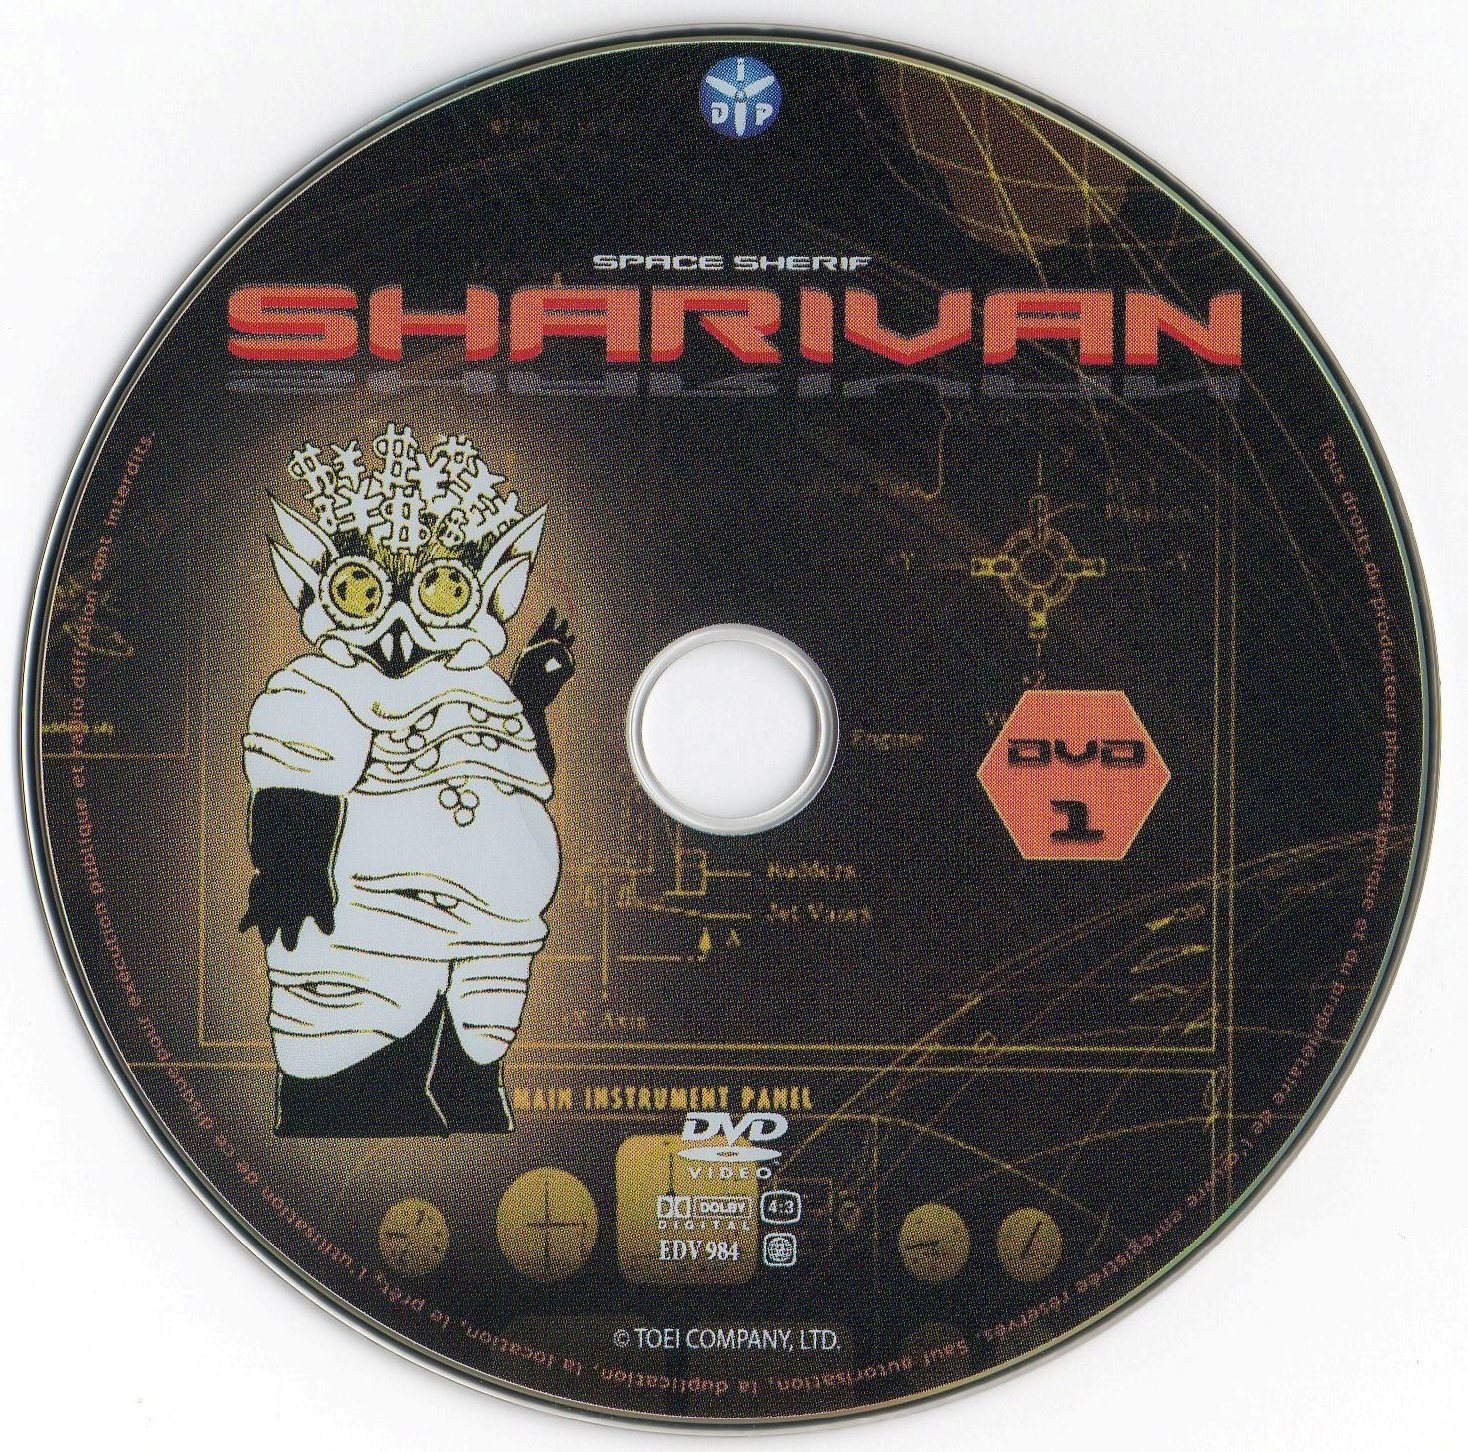 Sharivan DISC 01